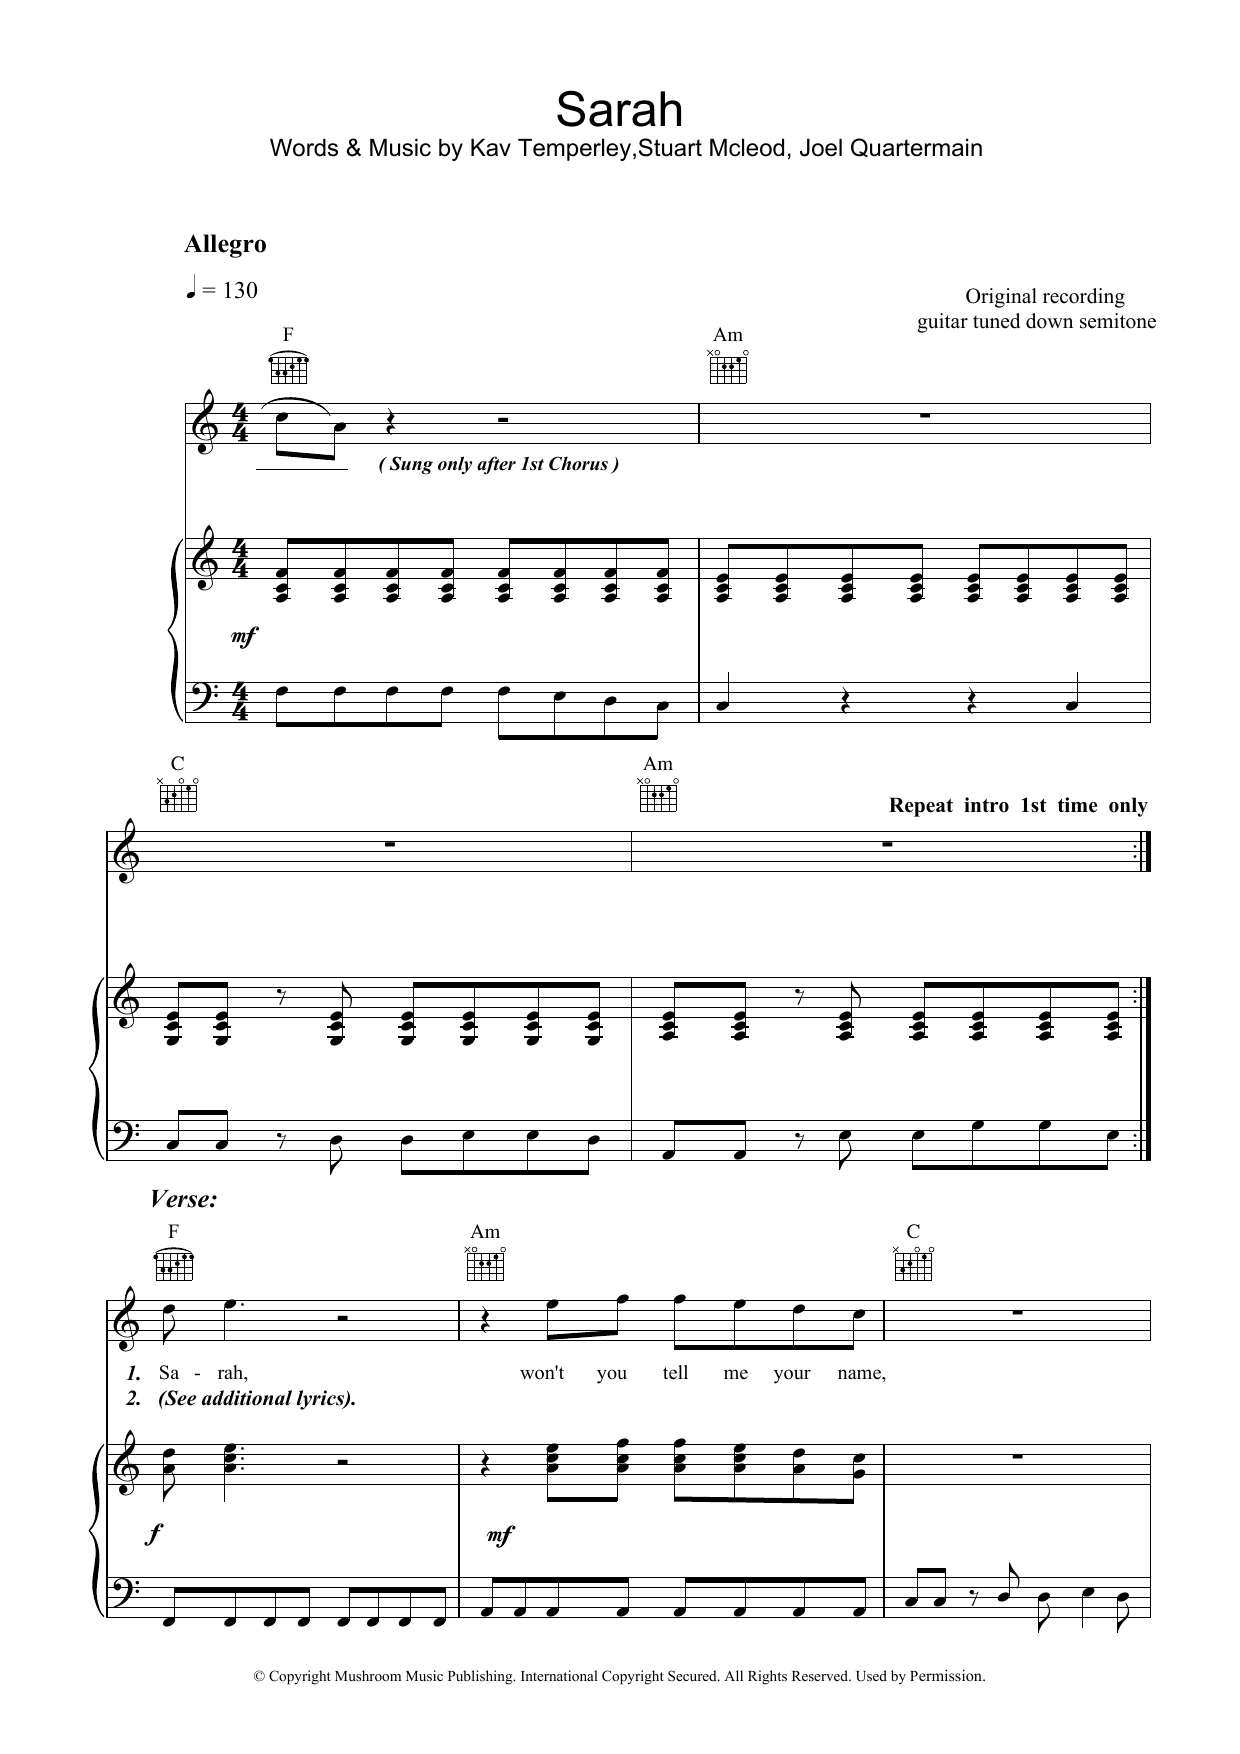 Eskimo Joe Sarah Sheet Music Notes & Chords for Piano, Vocal & Guitar (Right-Hand Melody) - Download or Print PDF